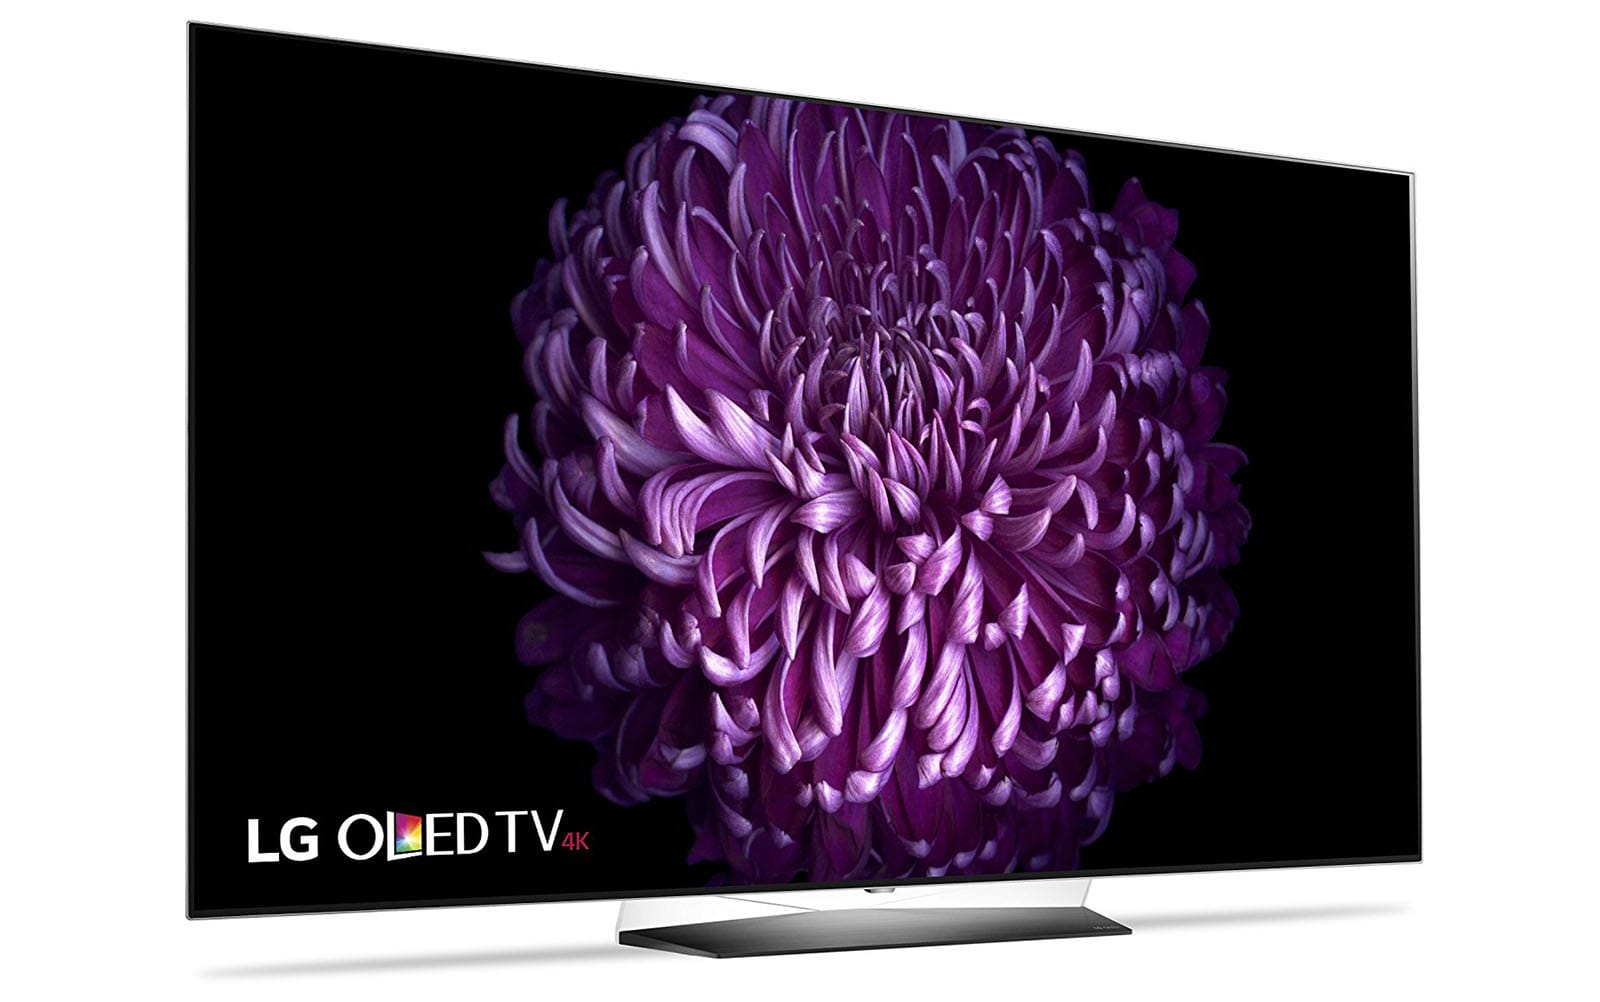 LG has steep Black Friday discounts on its premium OLED TVs